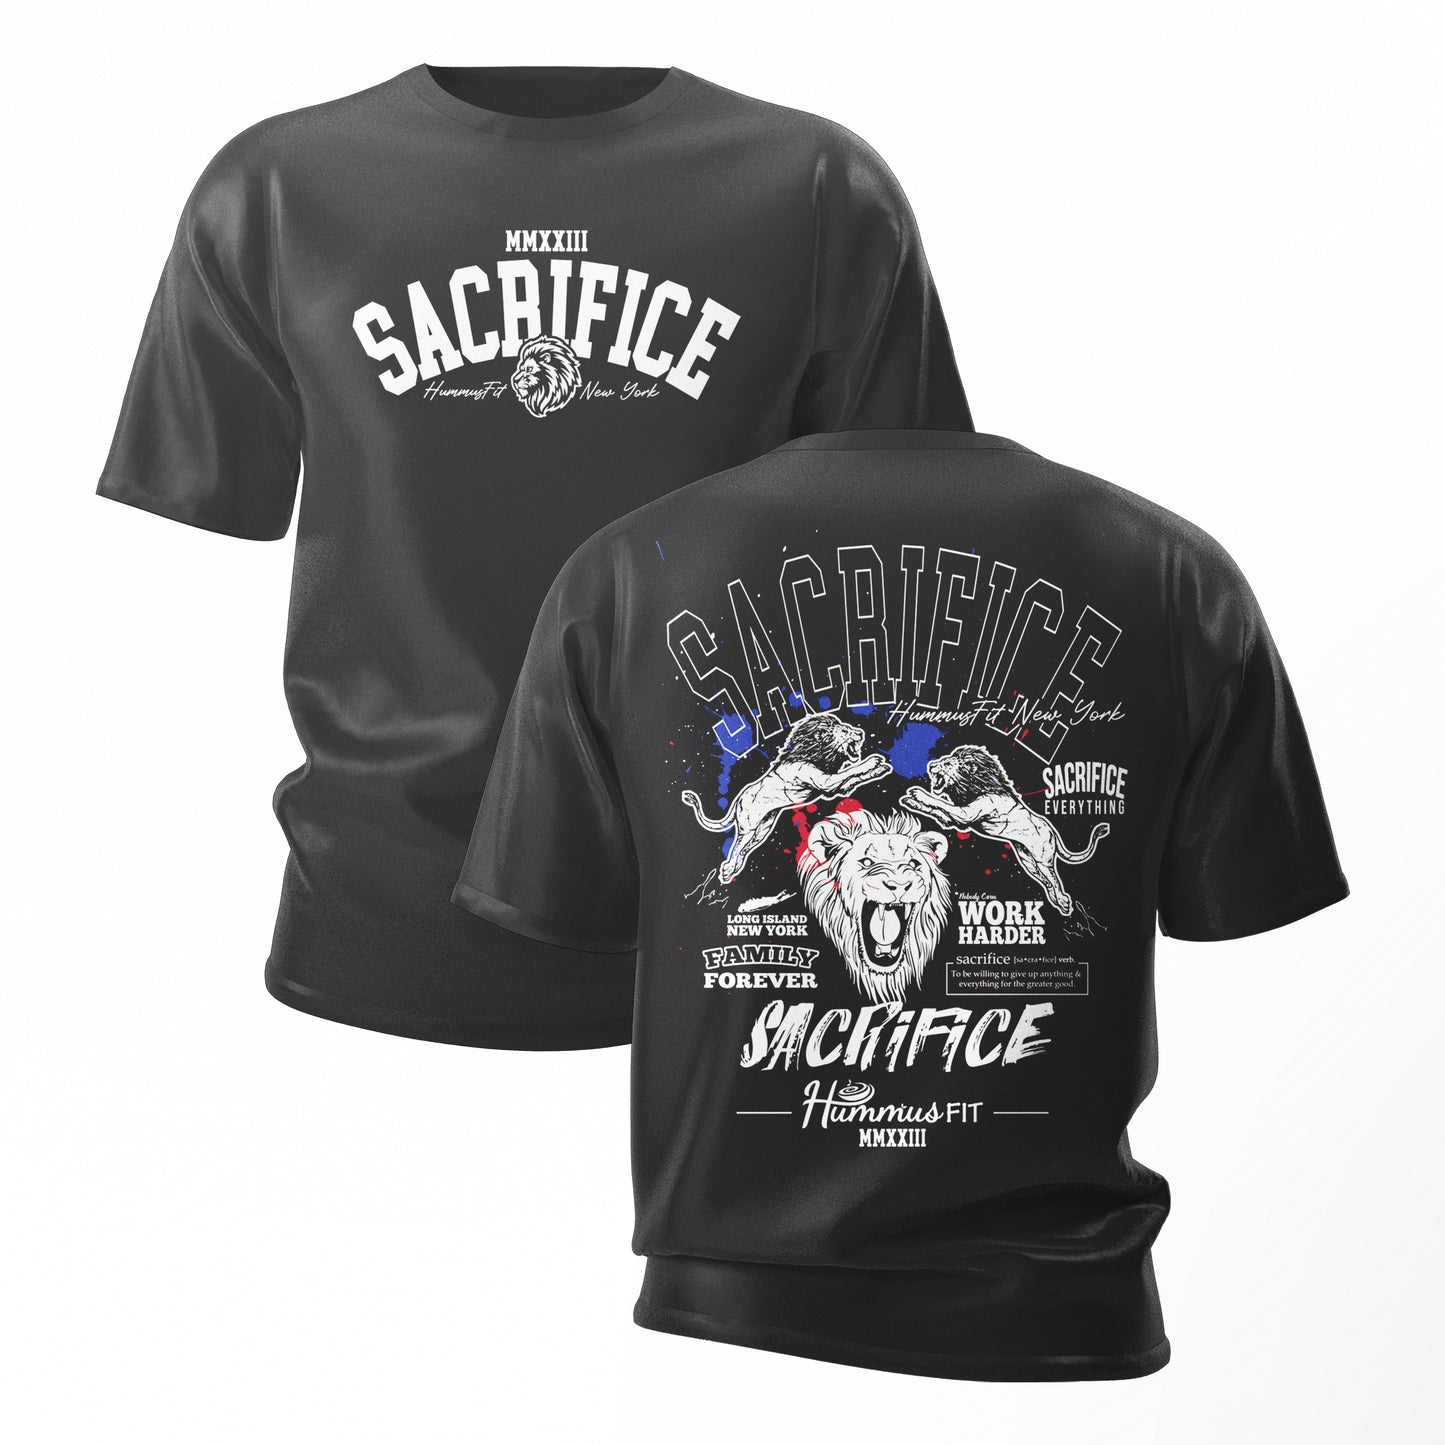 MMXXIII Oversized Sacrifice T-Shirt (limited stock)